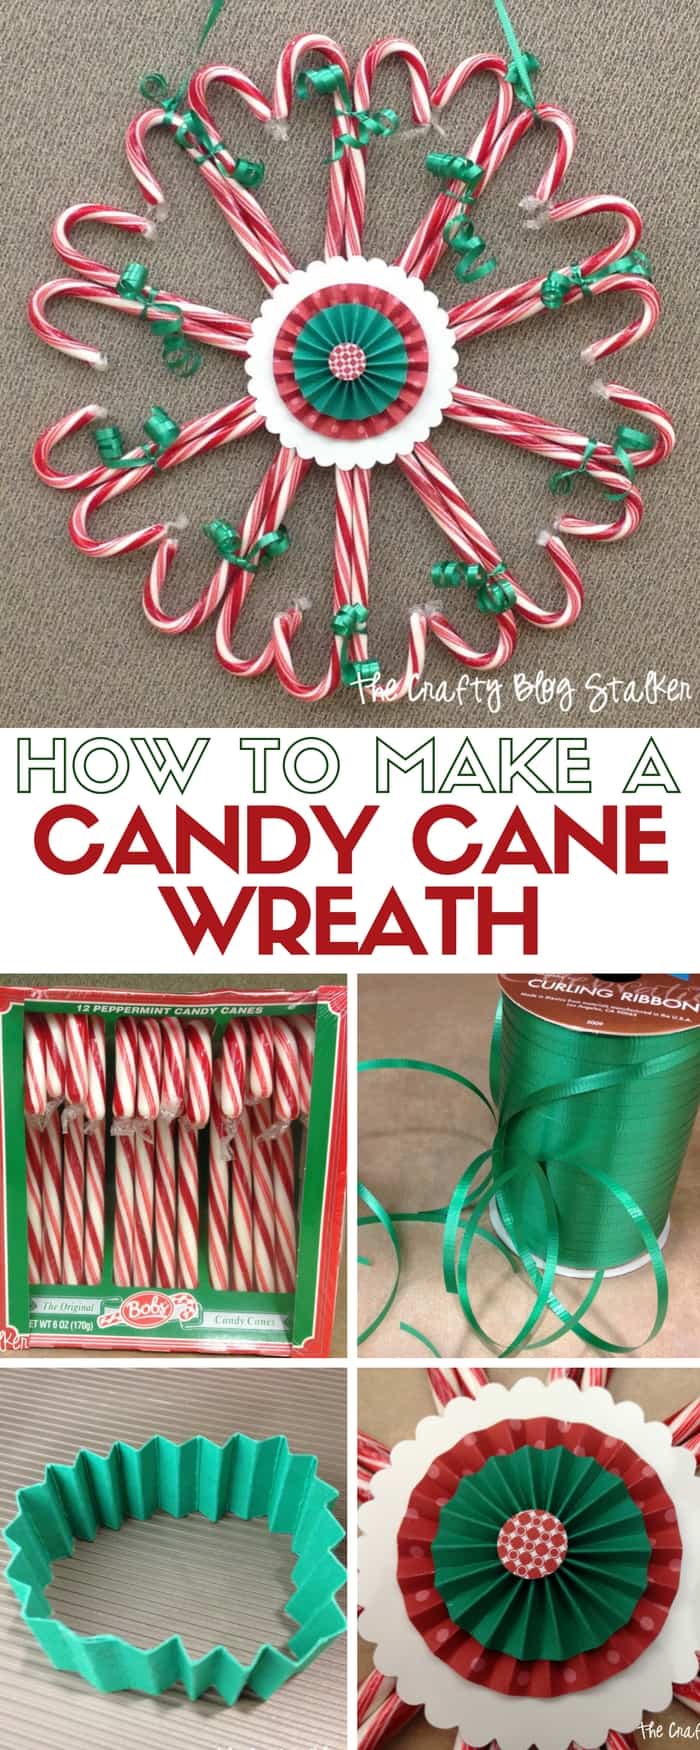 Candy cane wreath